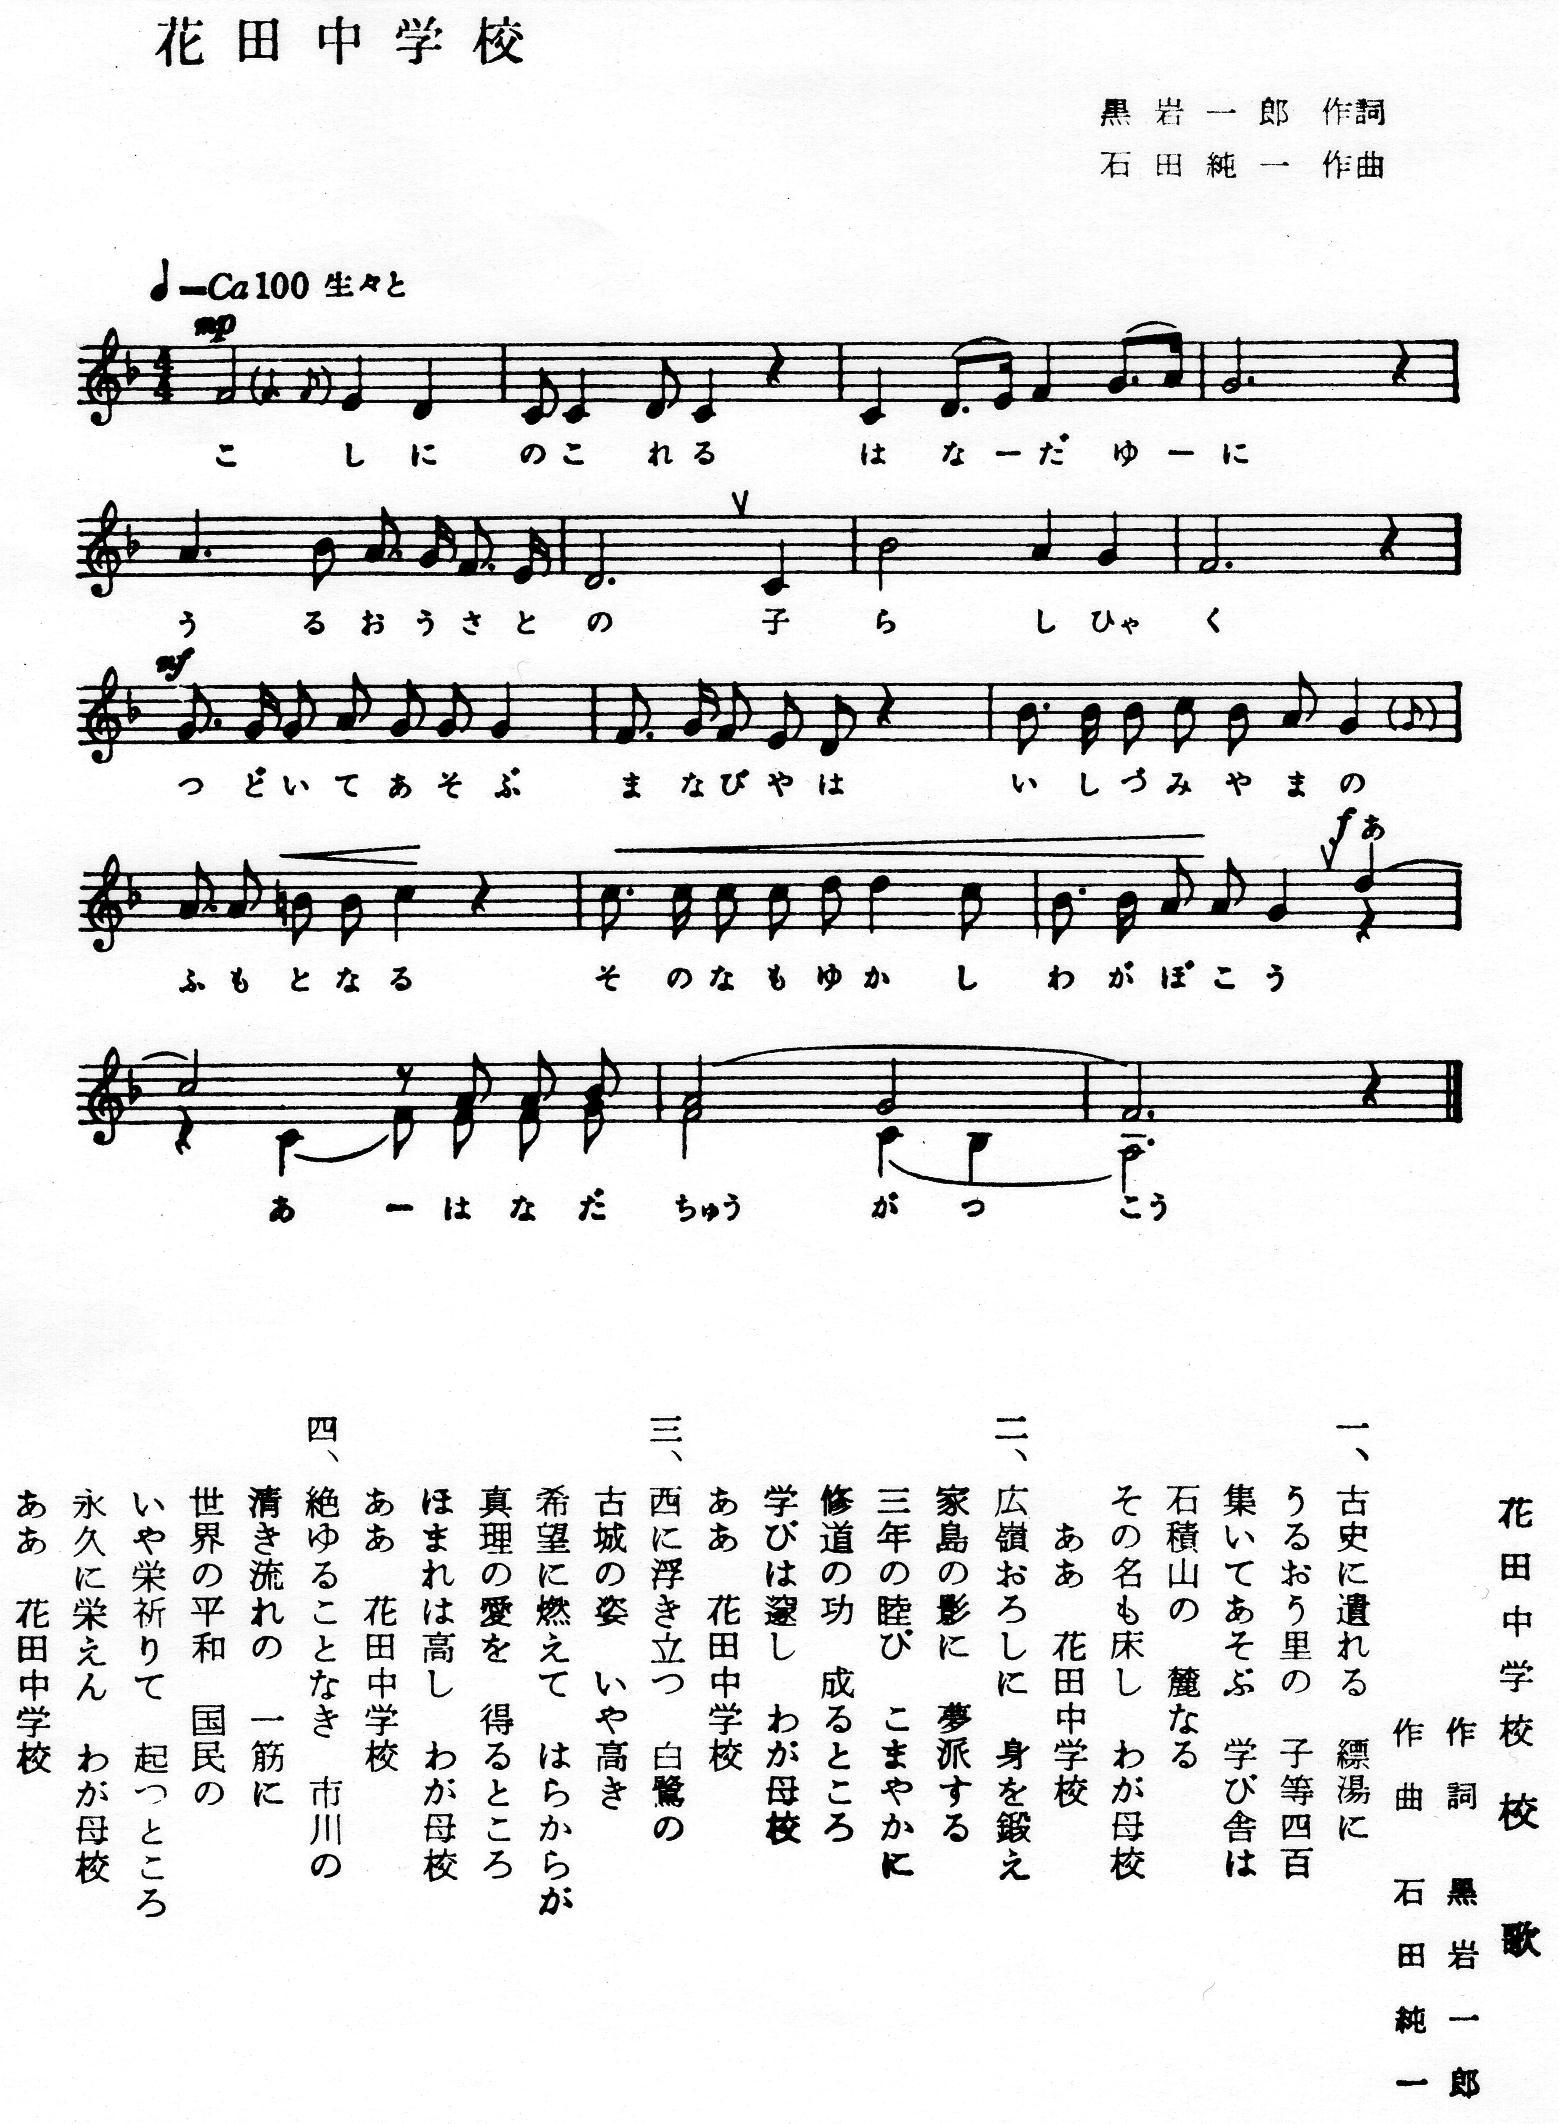 花田中学校校歌の楽譜